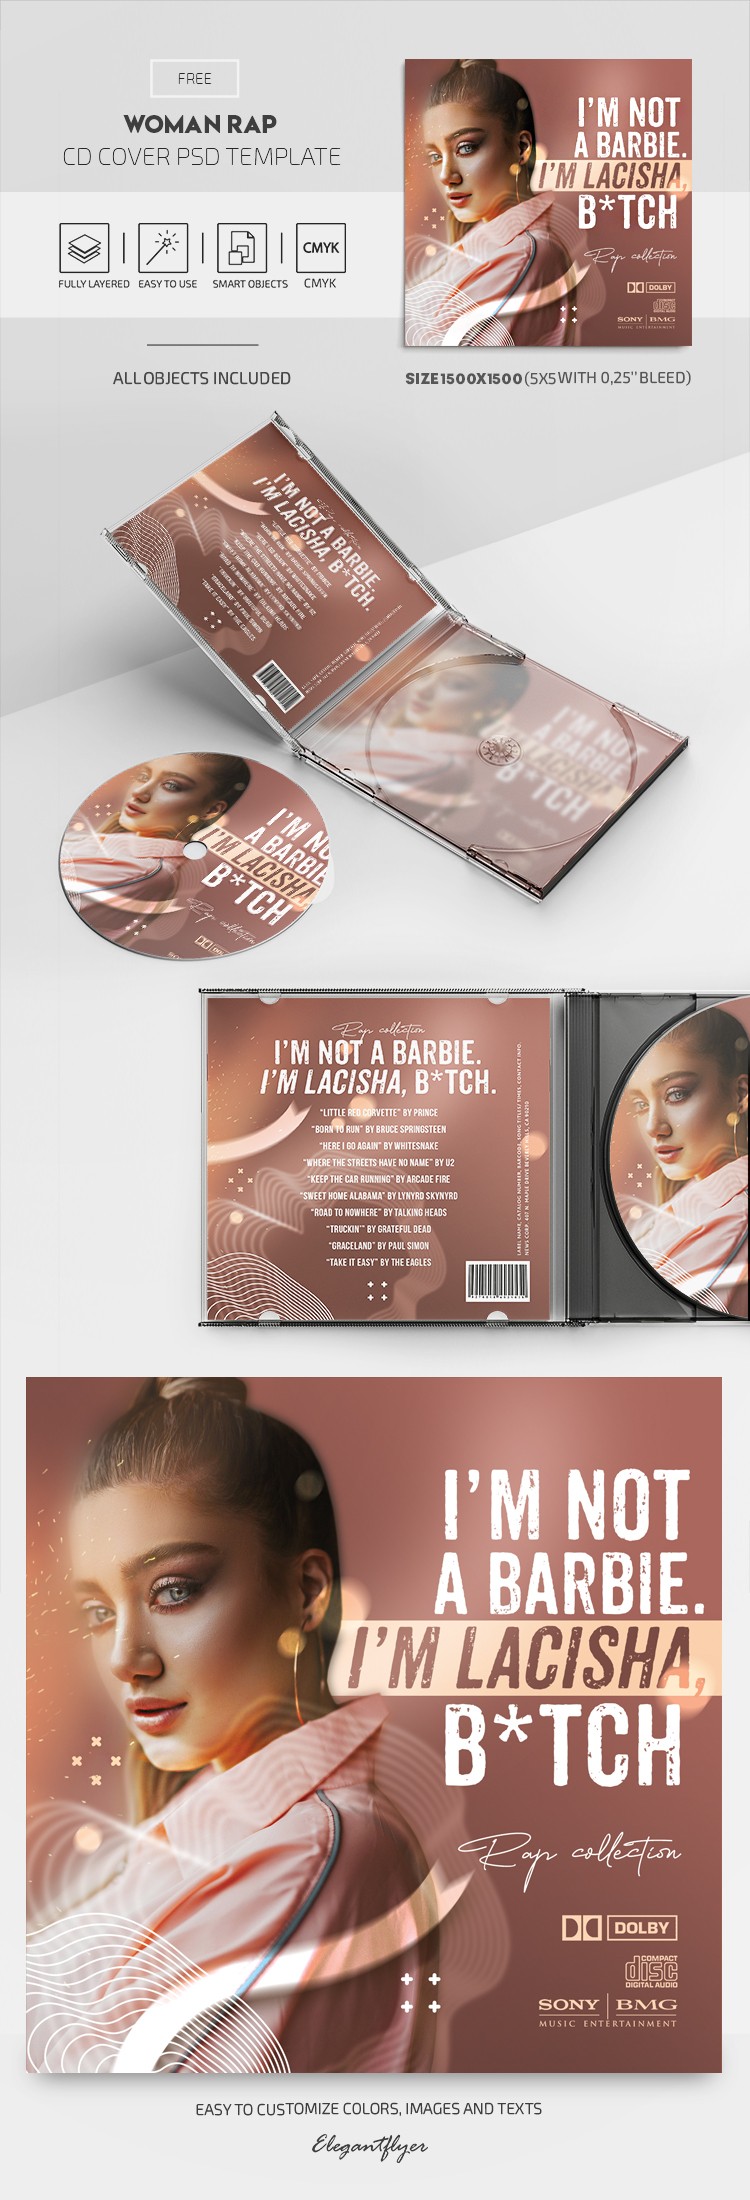 Frauen Rap CD Cover by ElegantFlyer